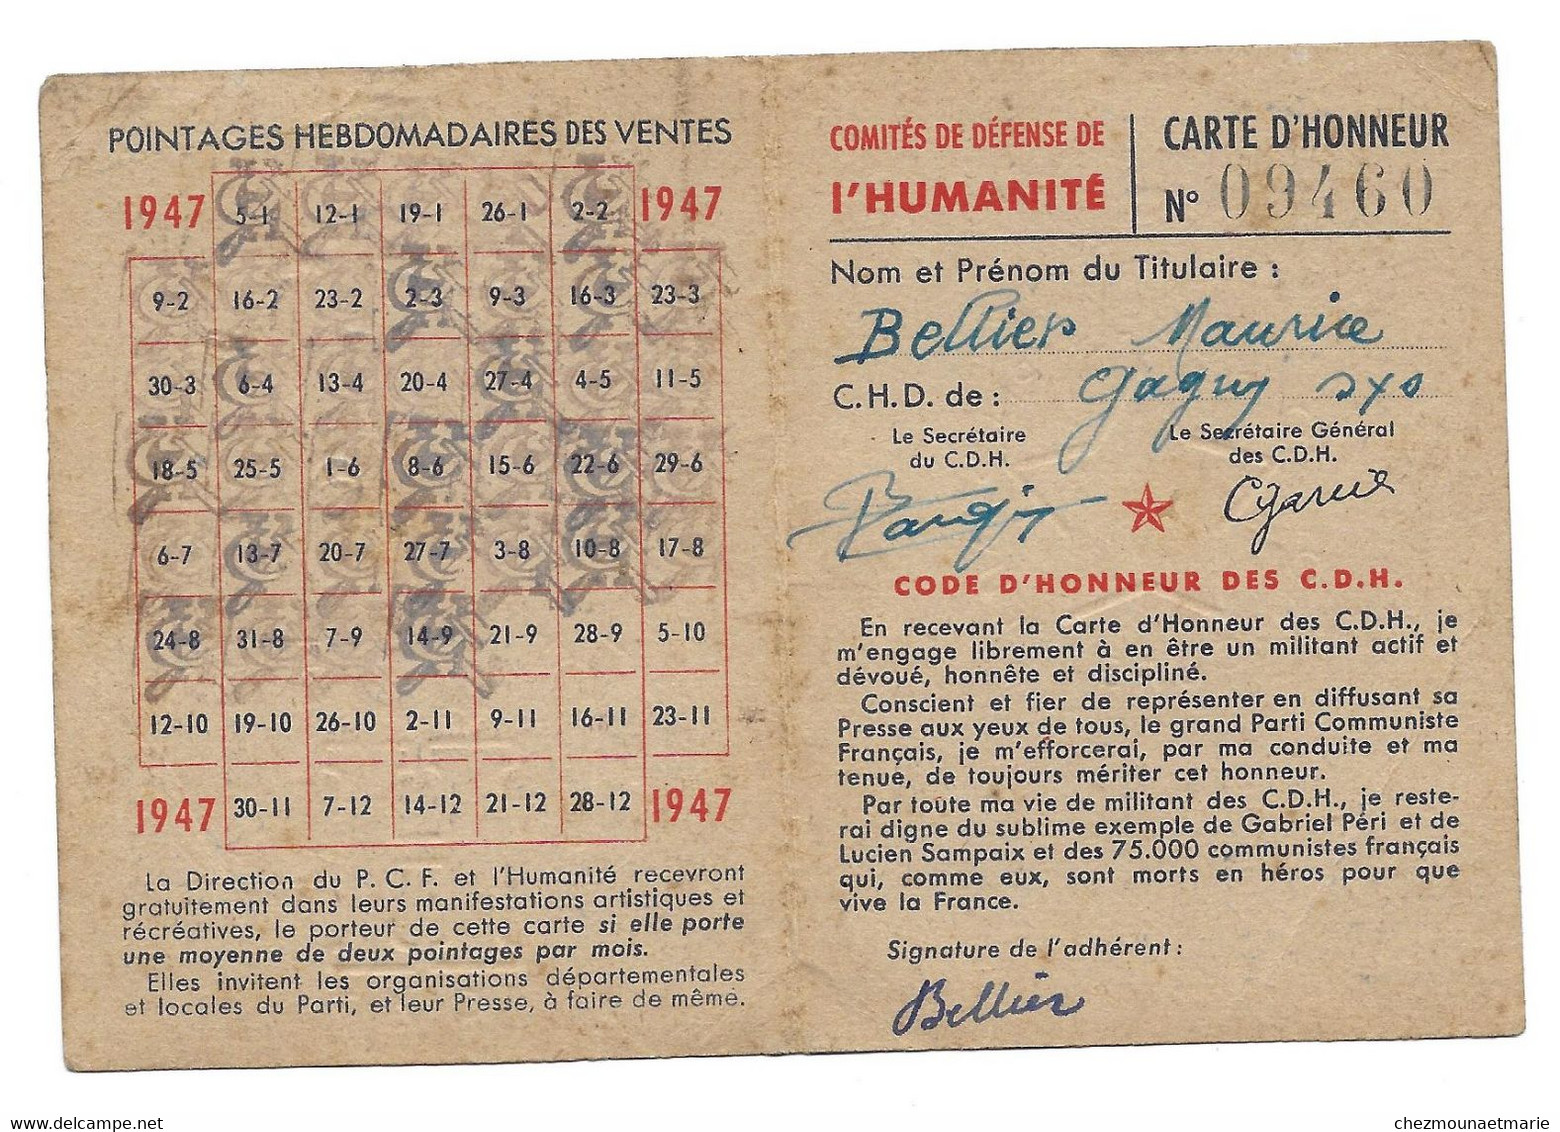 1947 GAGNY COMITES DEFENSE HUMANITE CHD CARTE D HONNEUR BELLIER MAURICE - Historische Dokumente